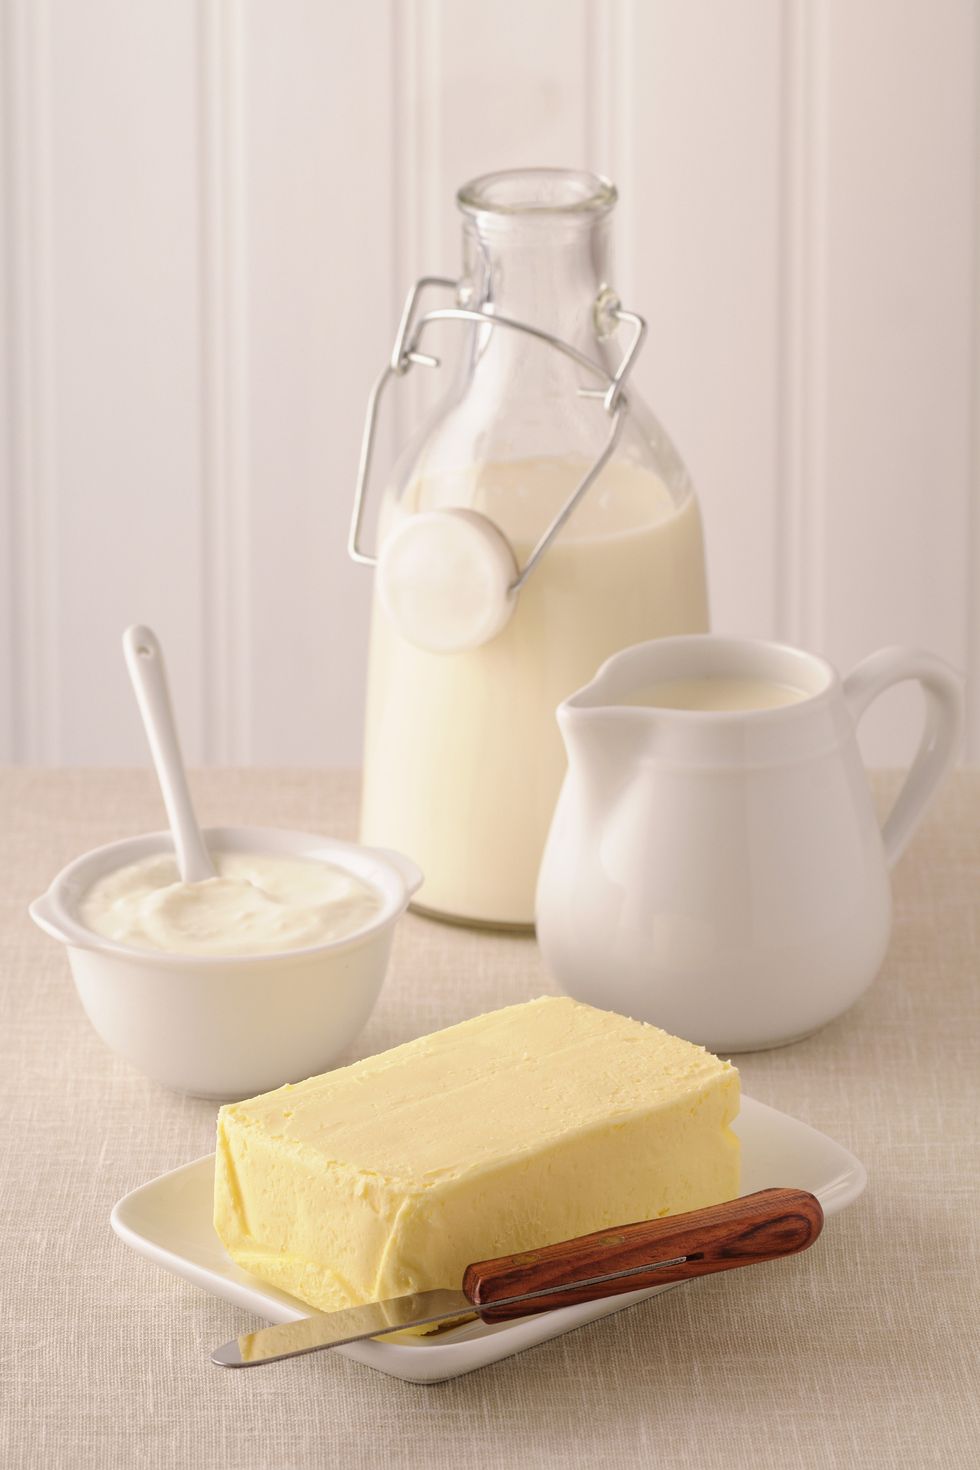 9 Best Heavy Cream Substitutes - How to Make Heavy Cream